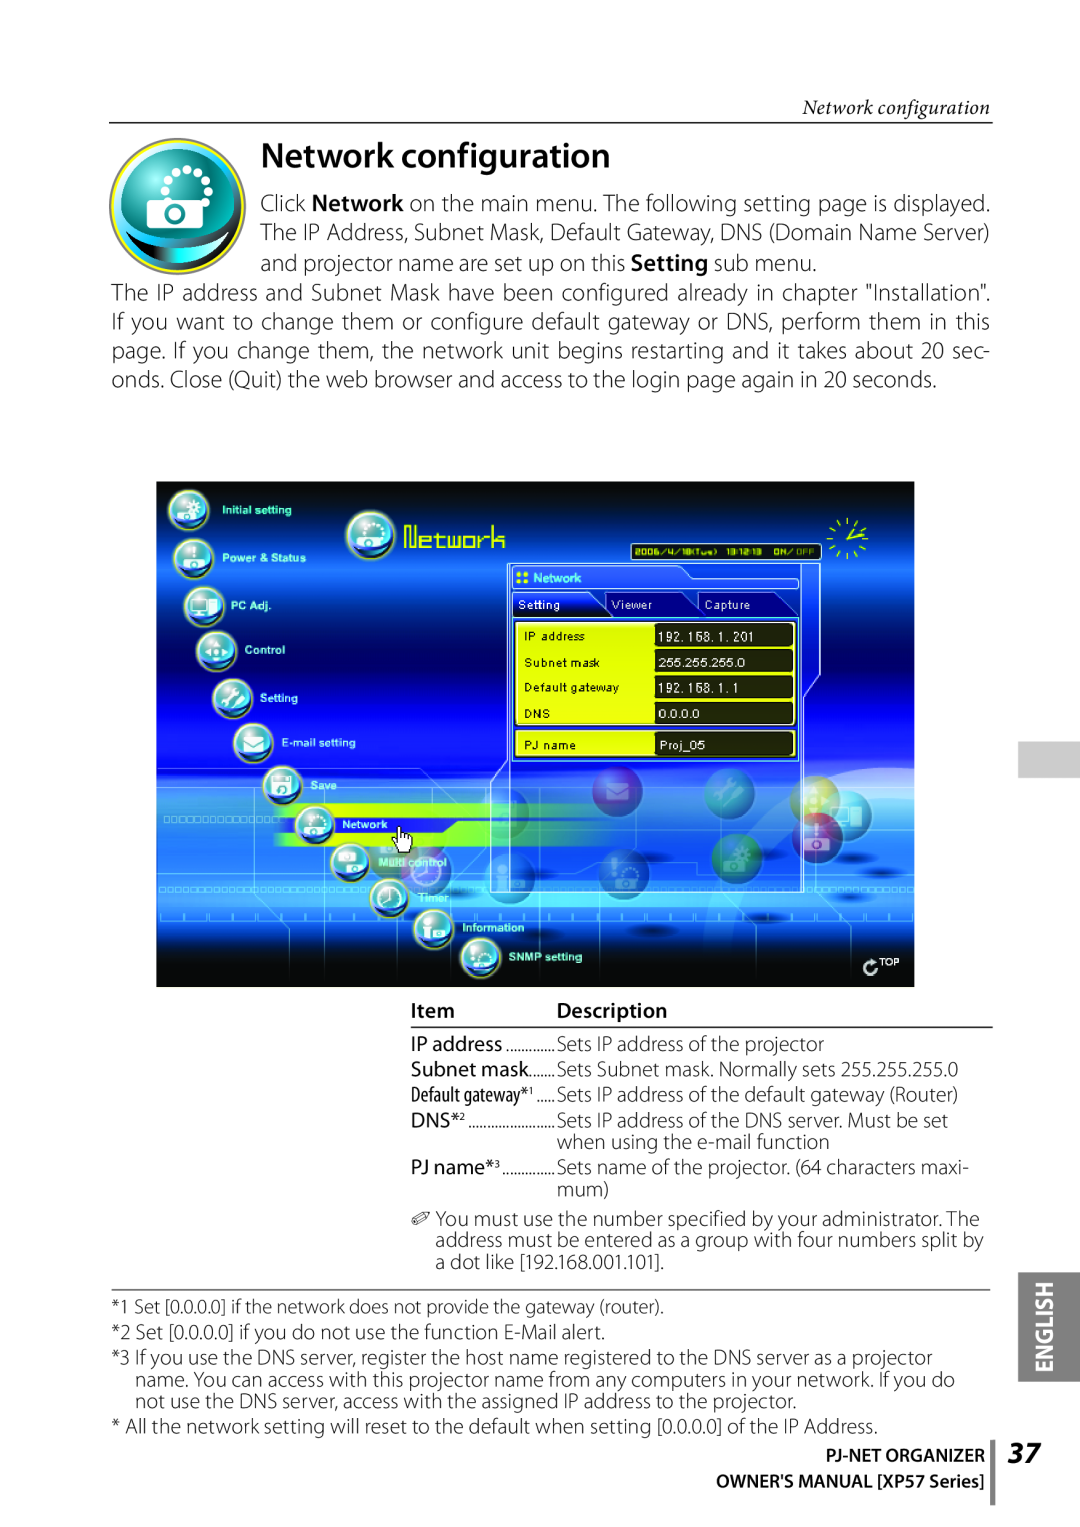 Sanyo POA-PN03C owner manual Network configuration, English, Item, Description 